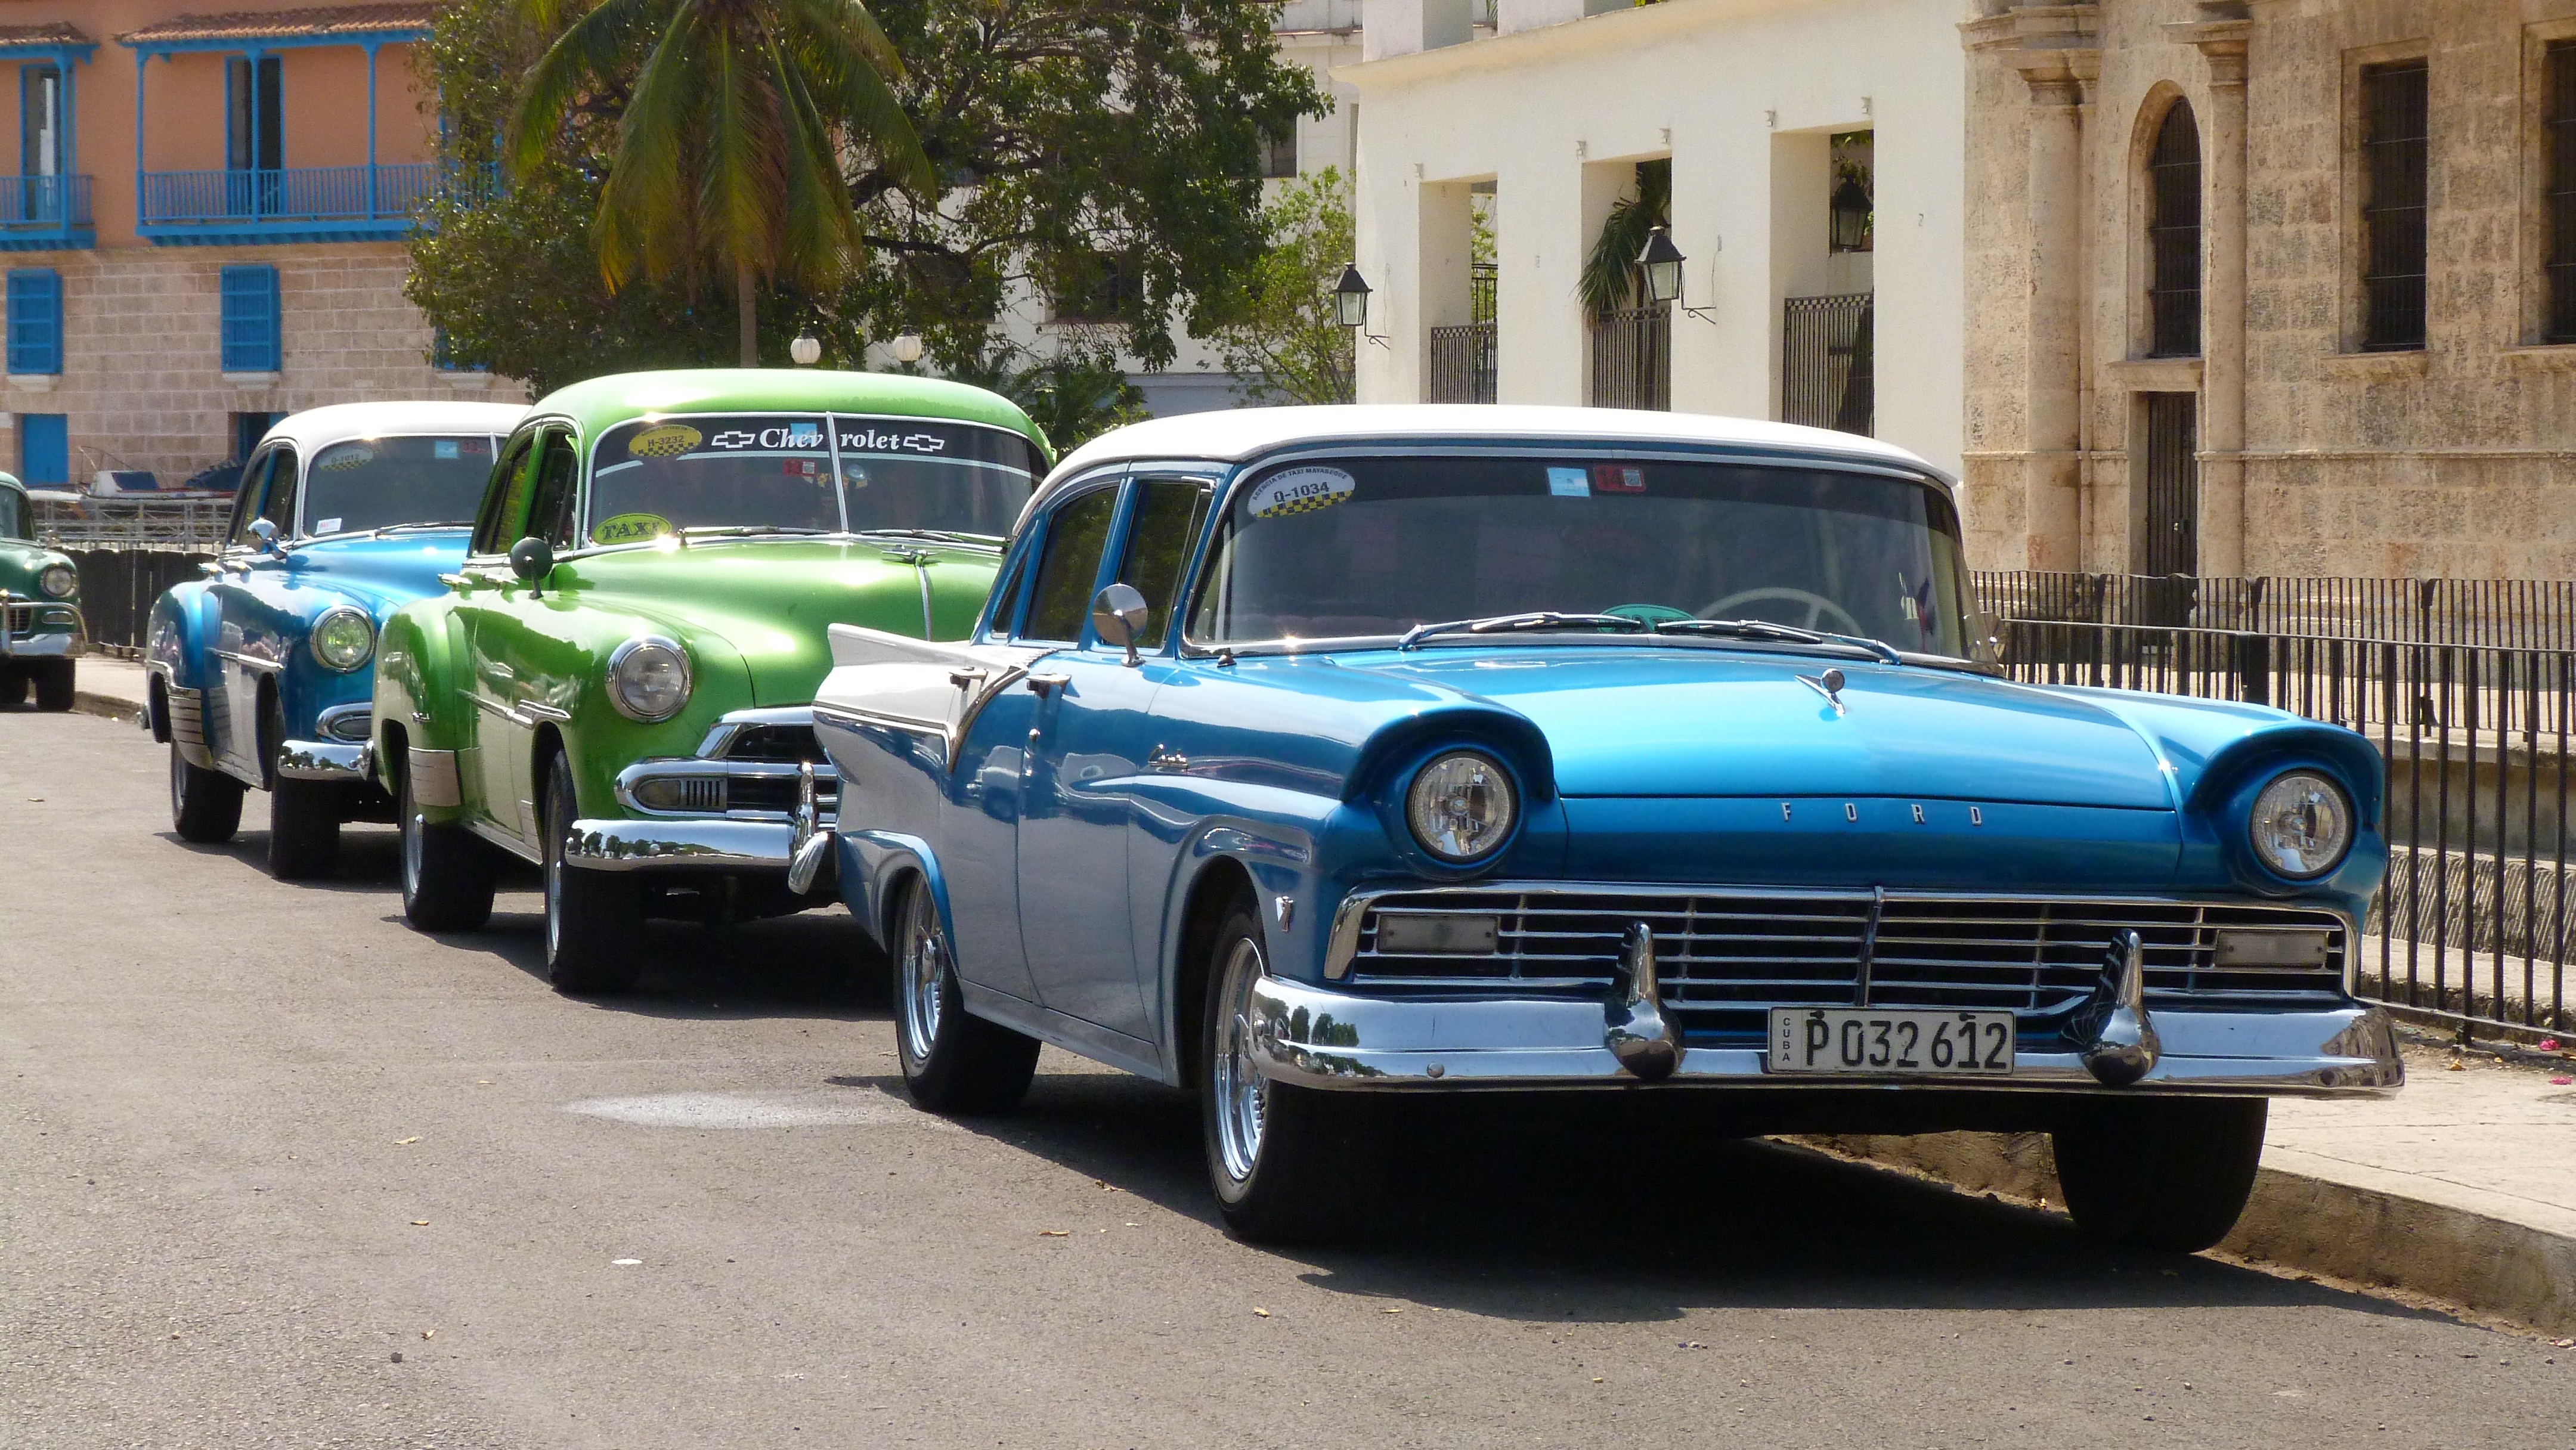 Wallpapers means of transportation Havana antique car on the desktop